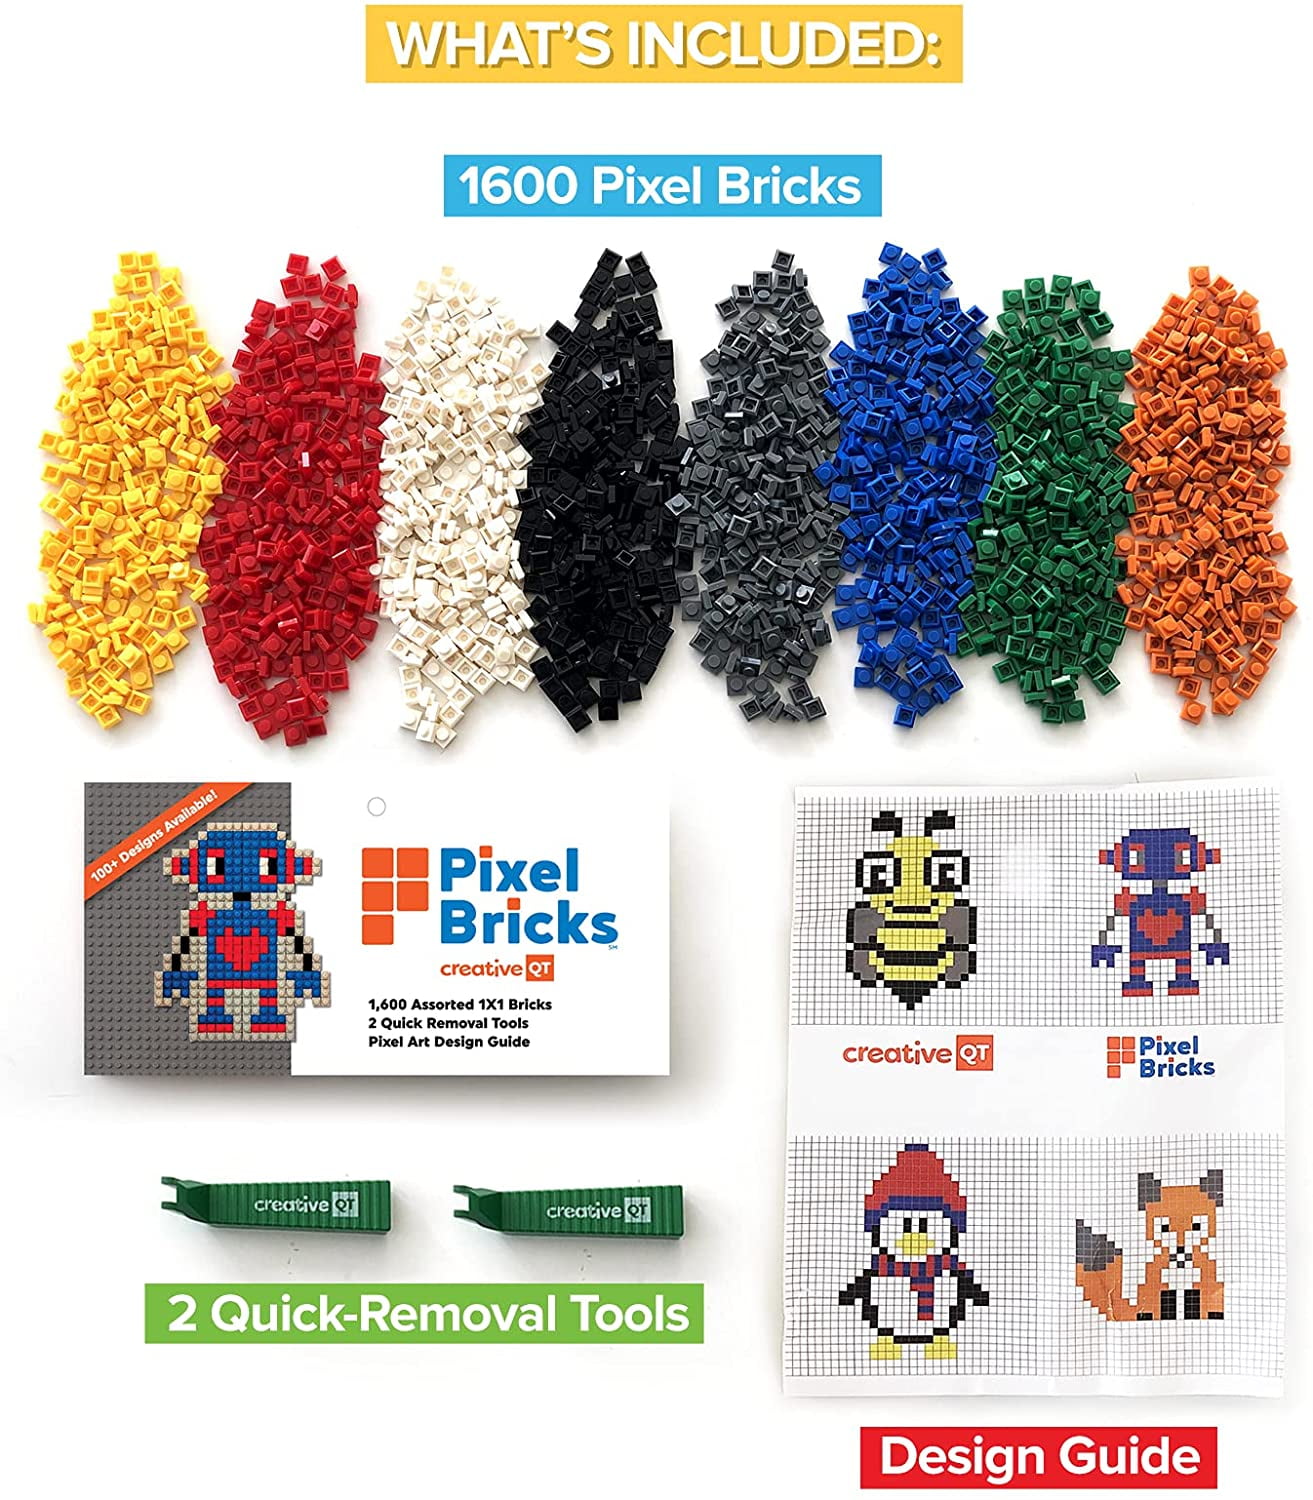 Creative qt Pixel Bricks Mosaic Kit: 1600 1x1 Building Bricks in 8 Classic Colors - Nano Blocks Art Set for Adults/STEM Toy Play